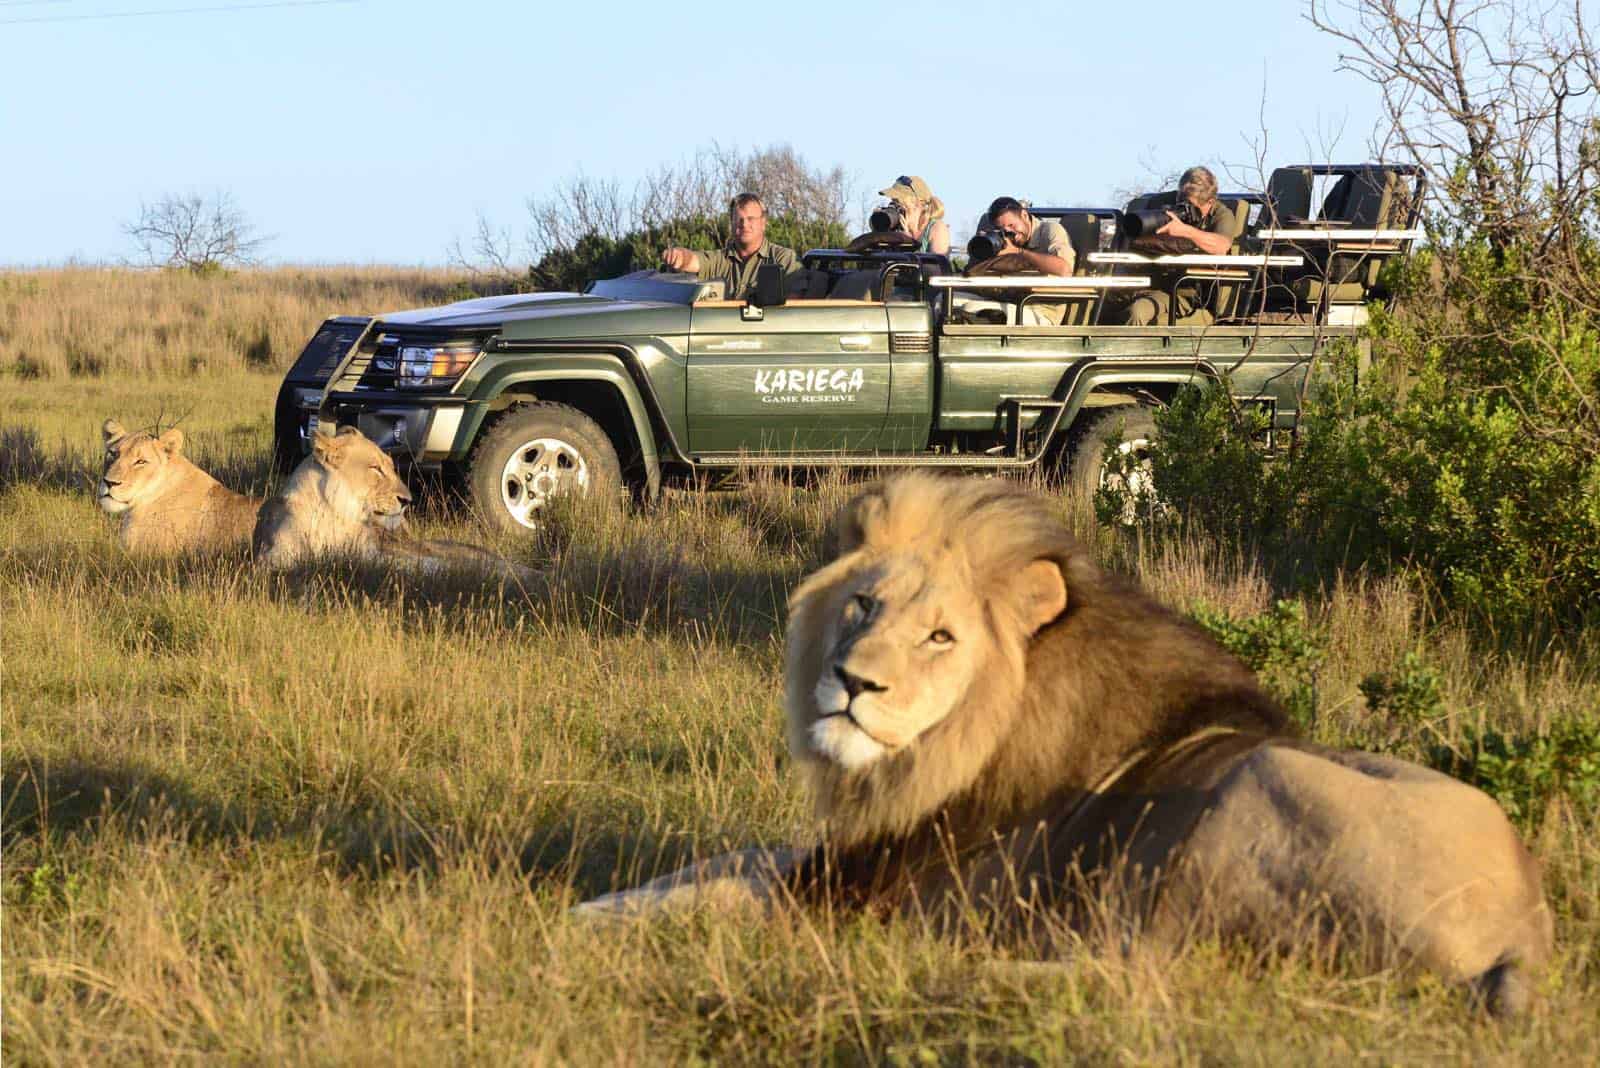 Løve I Kariega i Sydafrika